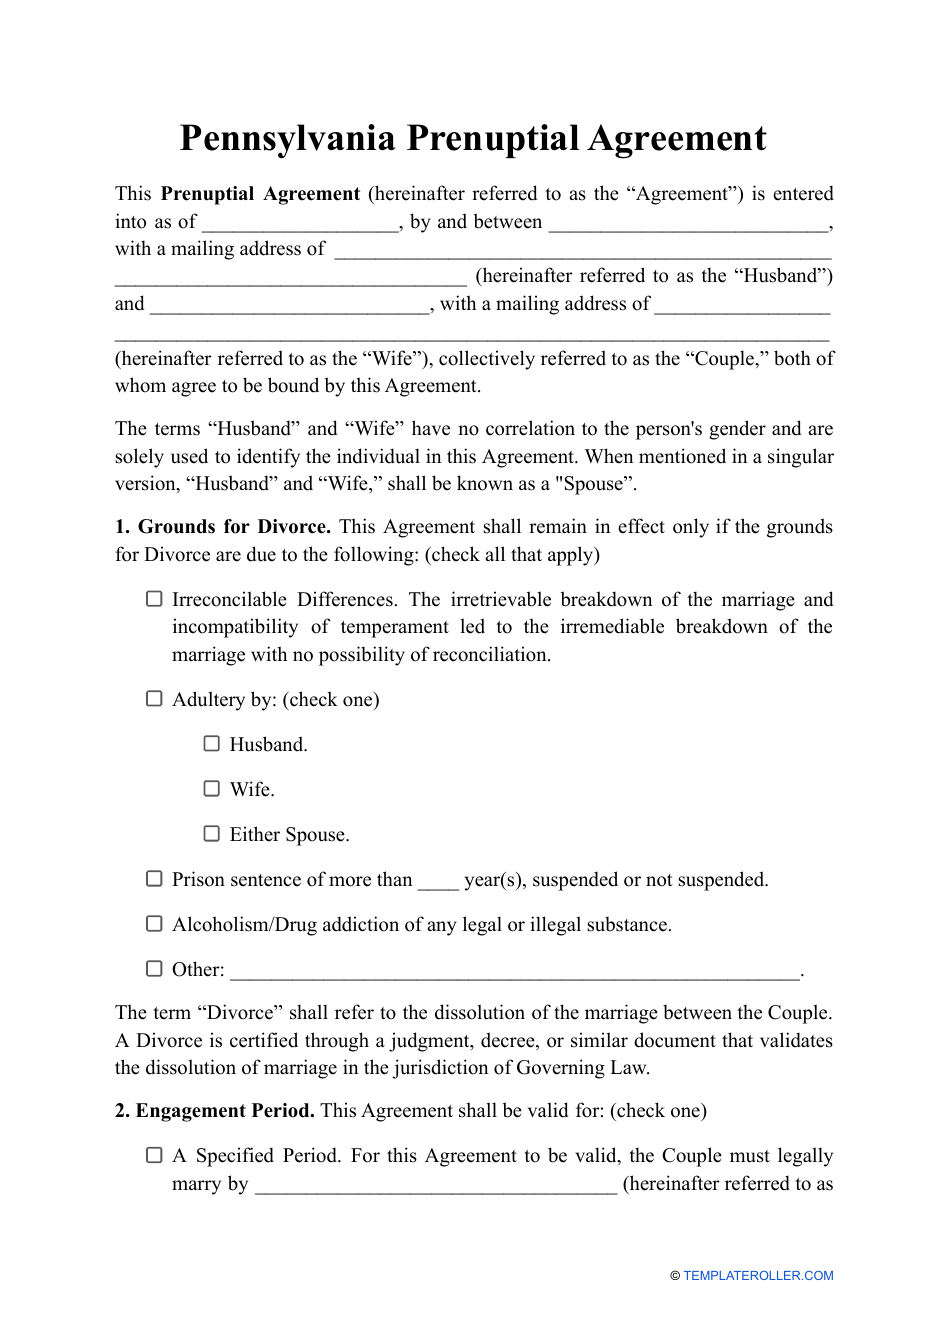 Prenuptial Agreement Template - Pennsylvania, Page 1